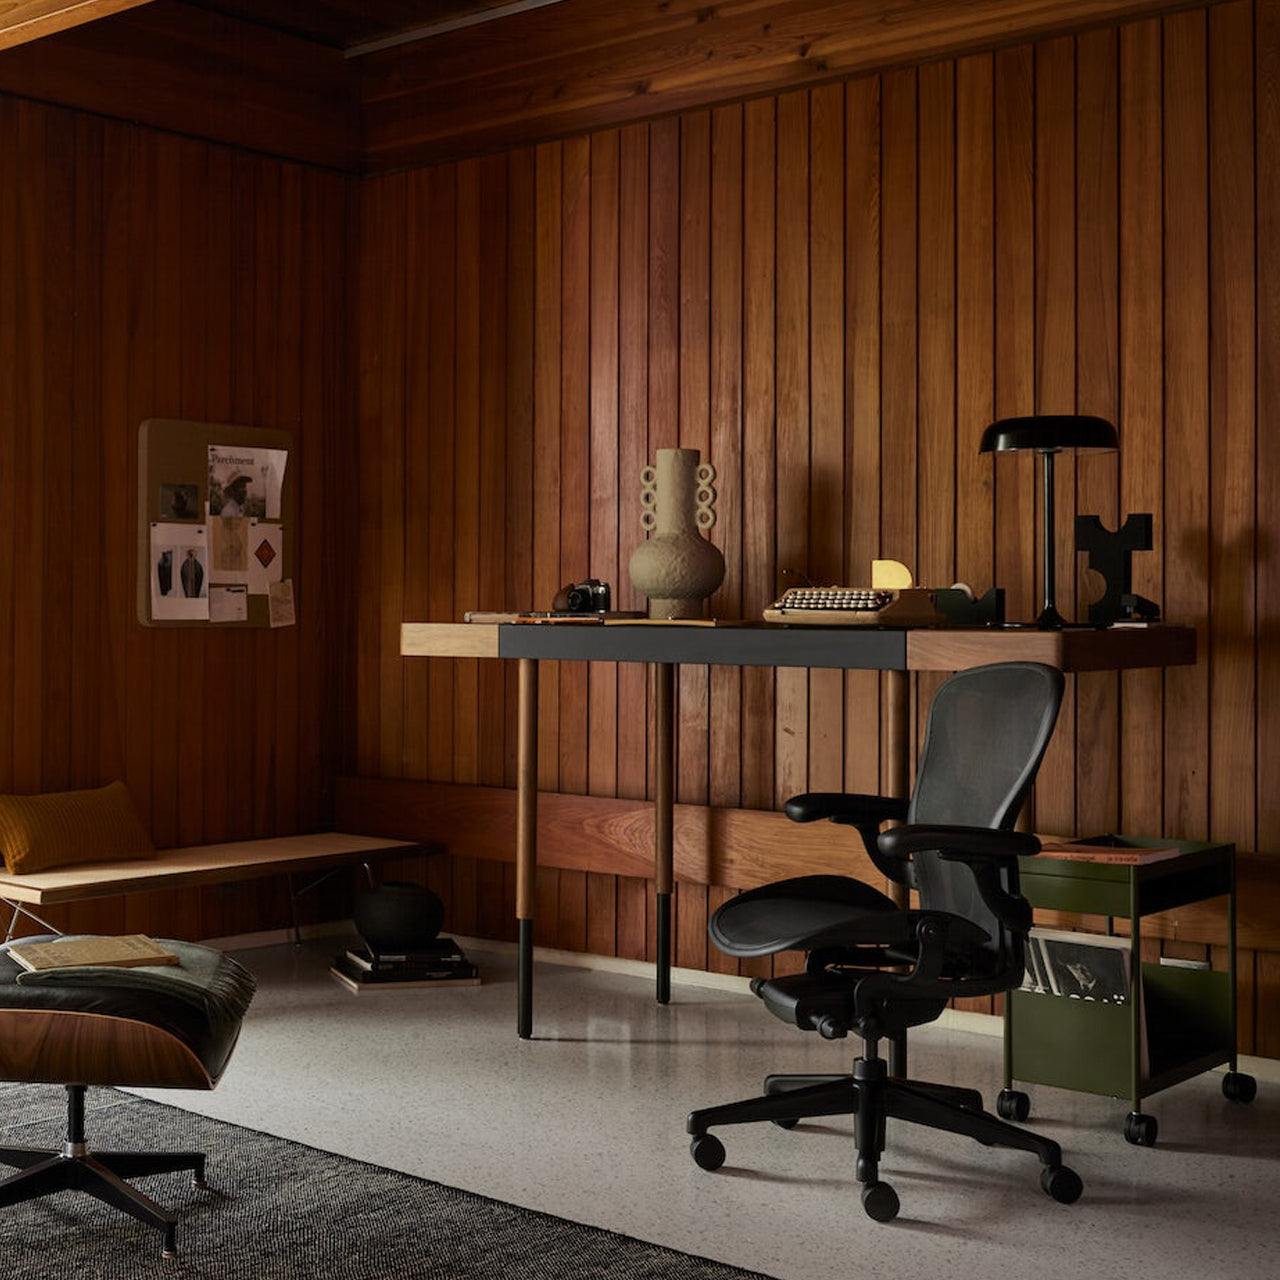 Herman Miller Leatherwrap Sit to Stand Desk